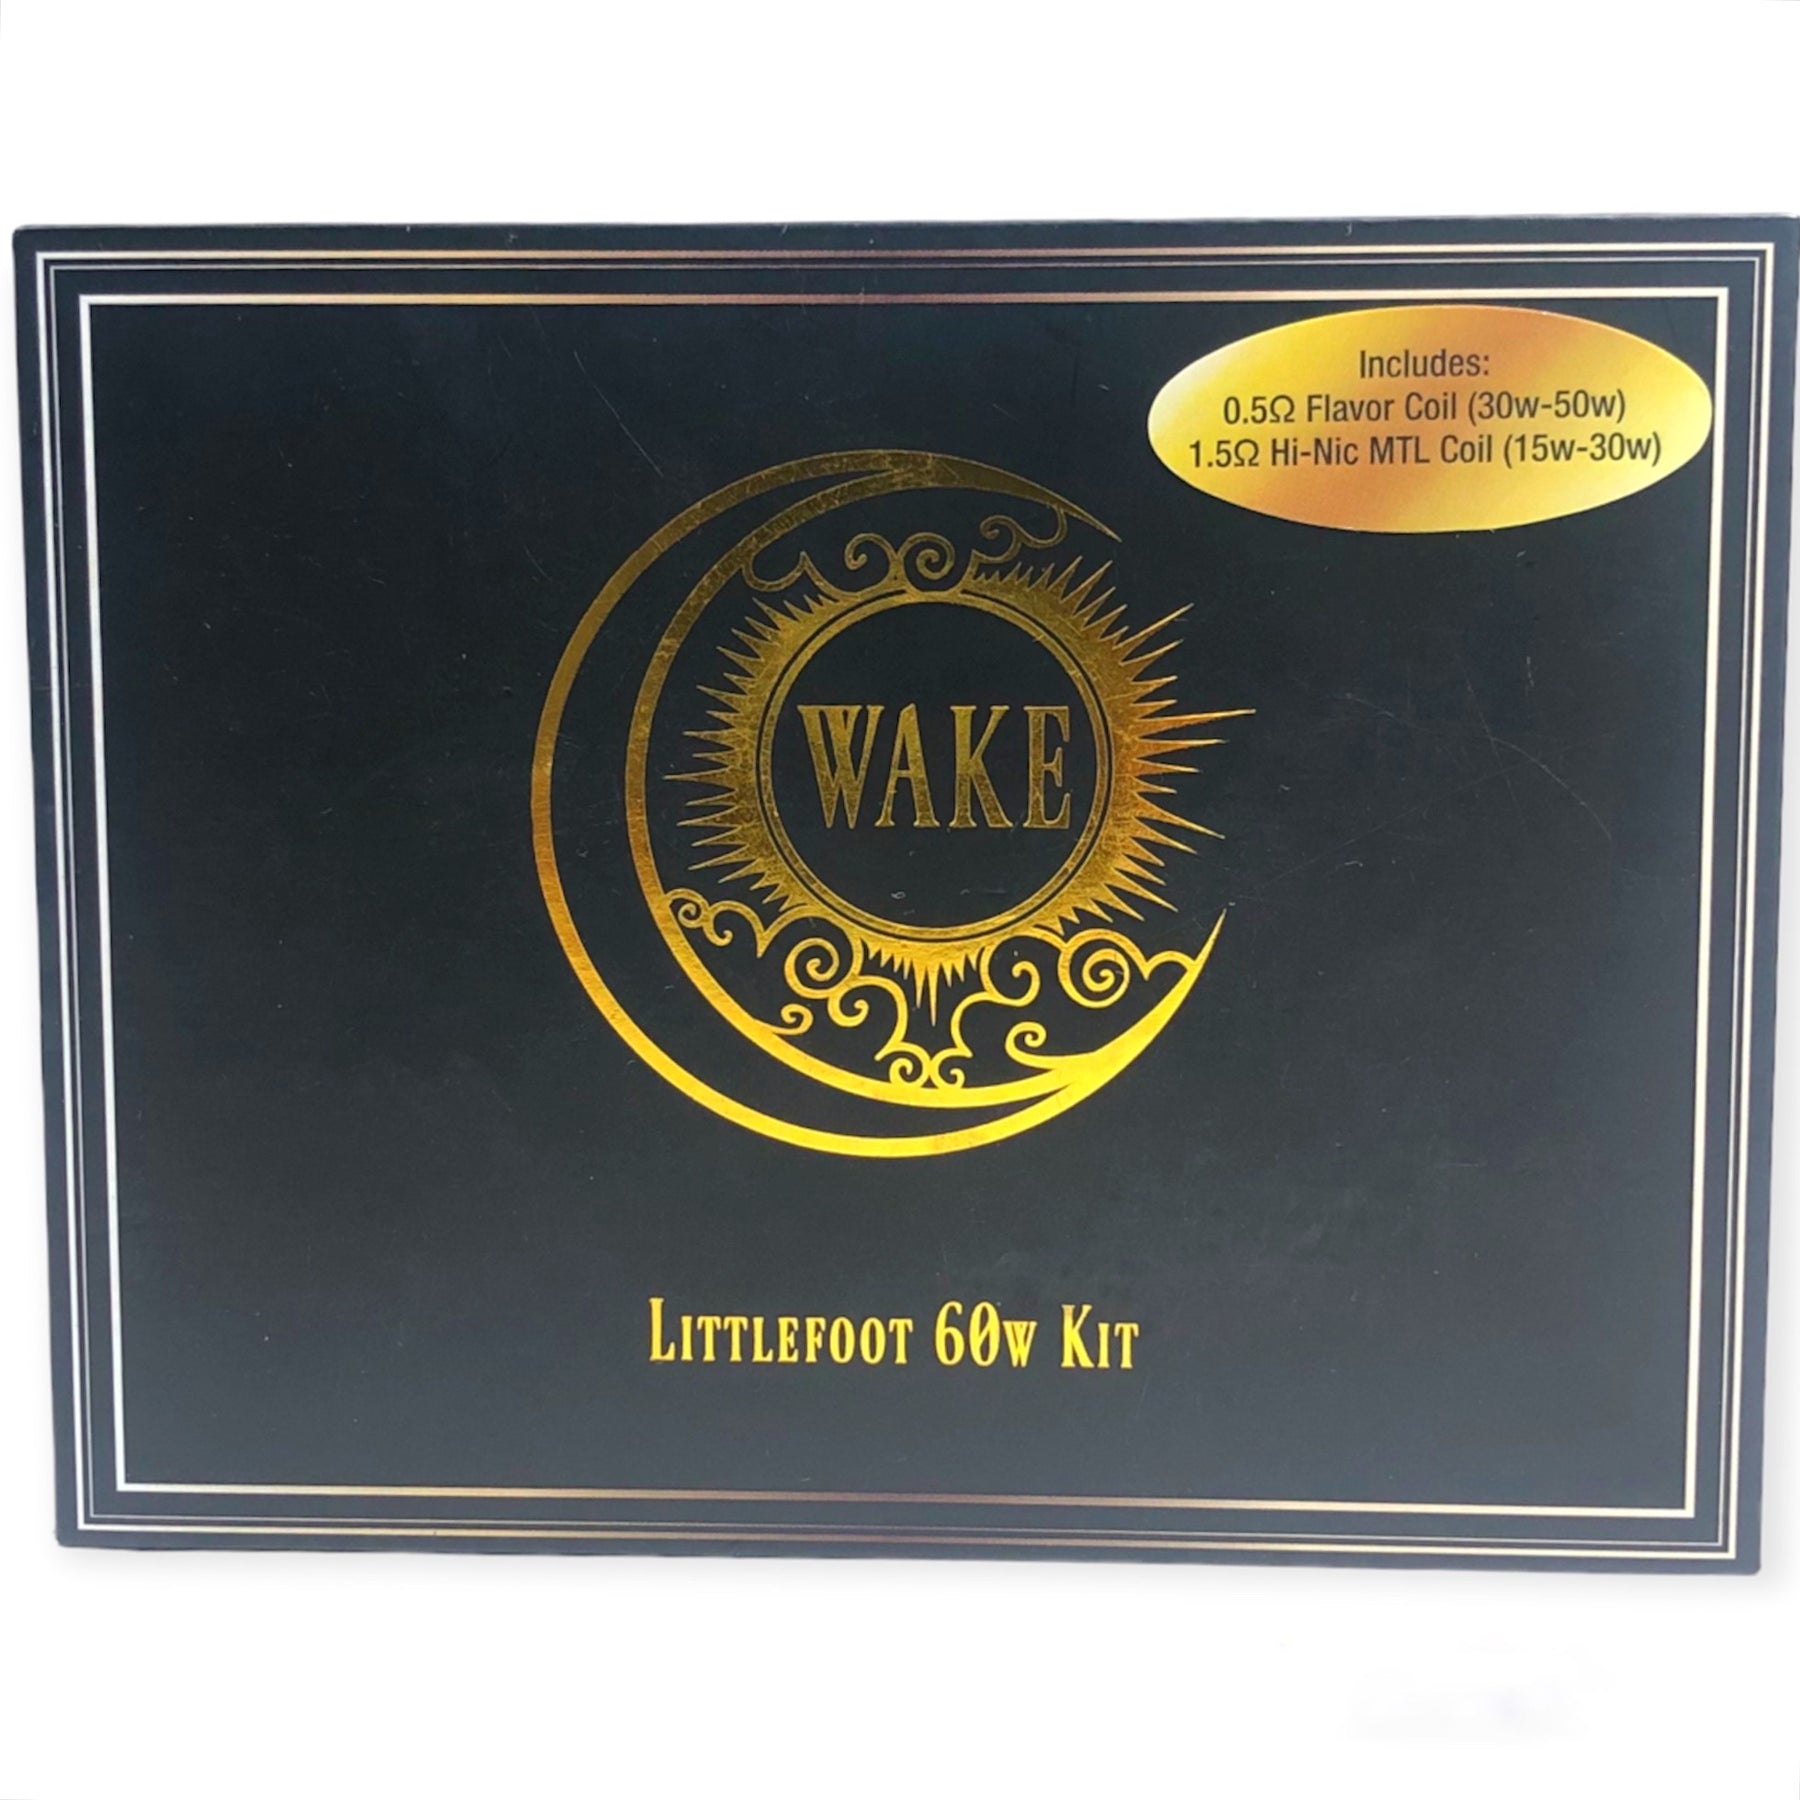 NEW ARRIVAL電子タバコ WAKE LF 60w kit 喫煙具・ライター